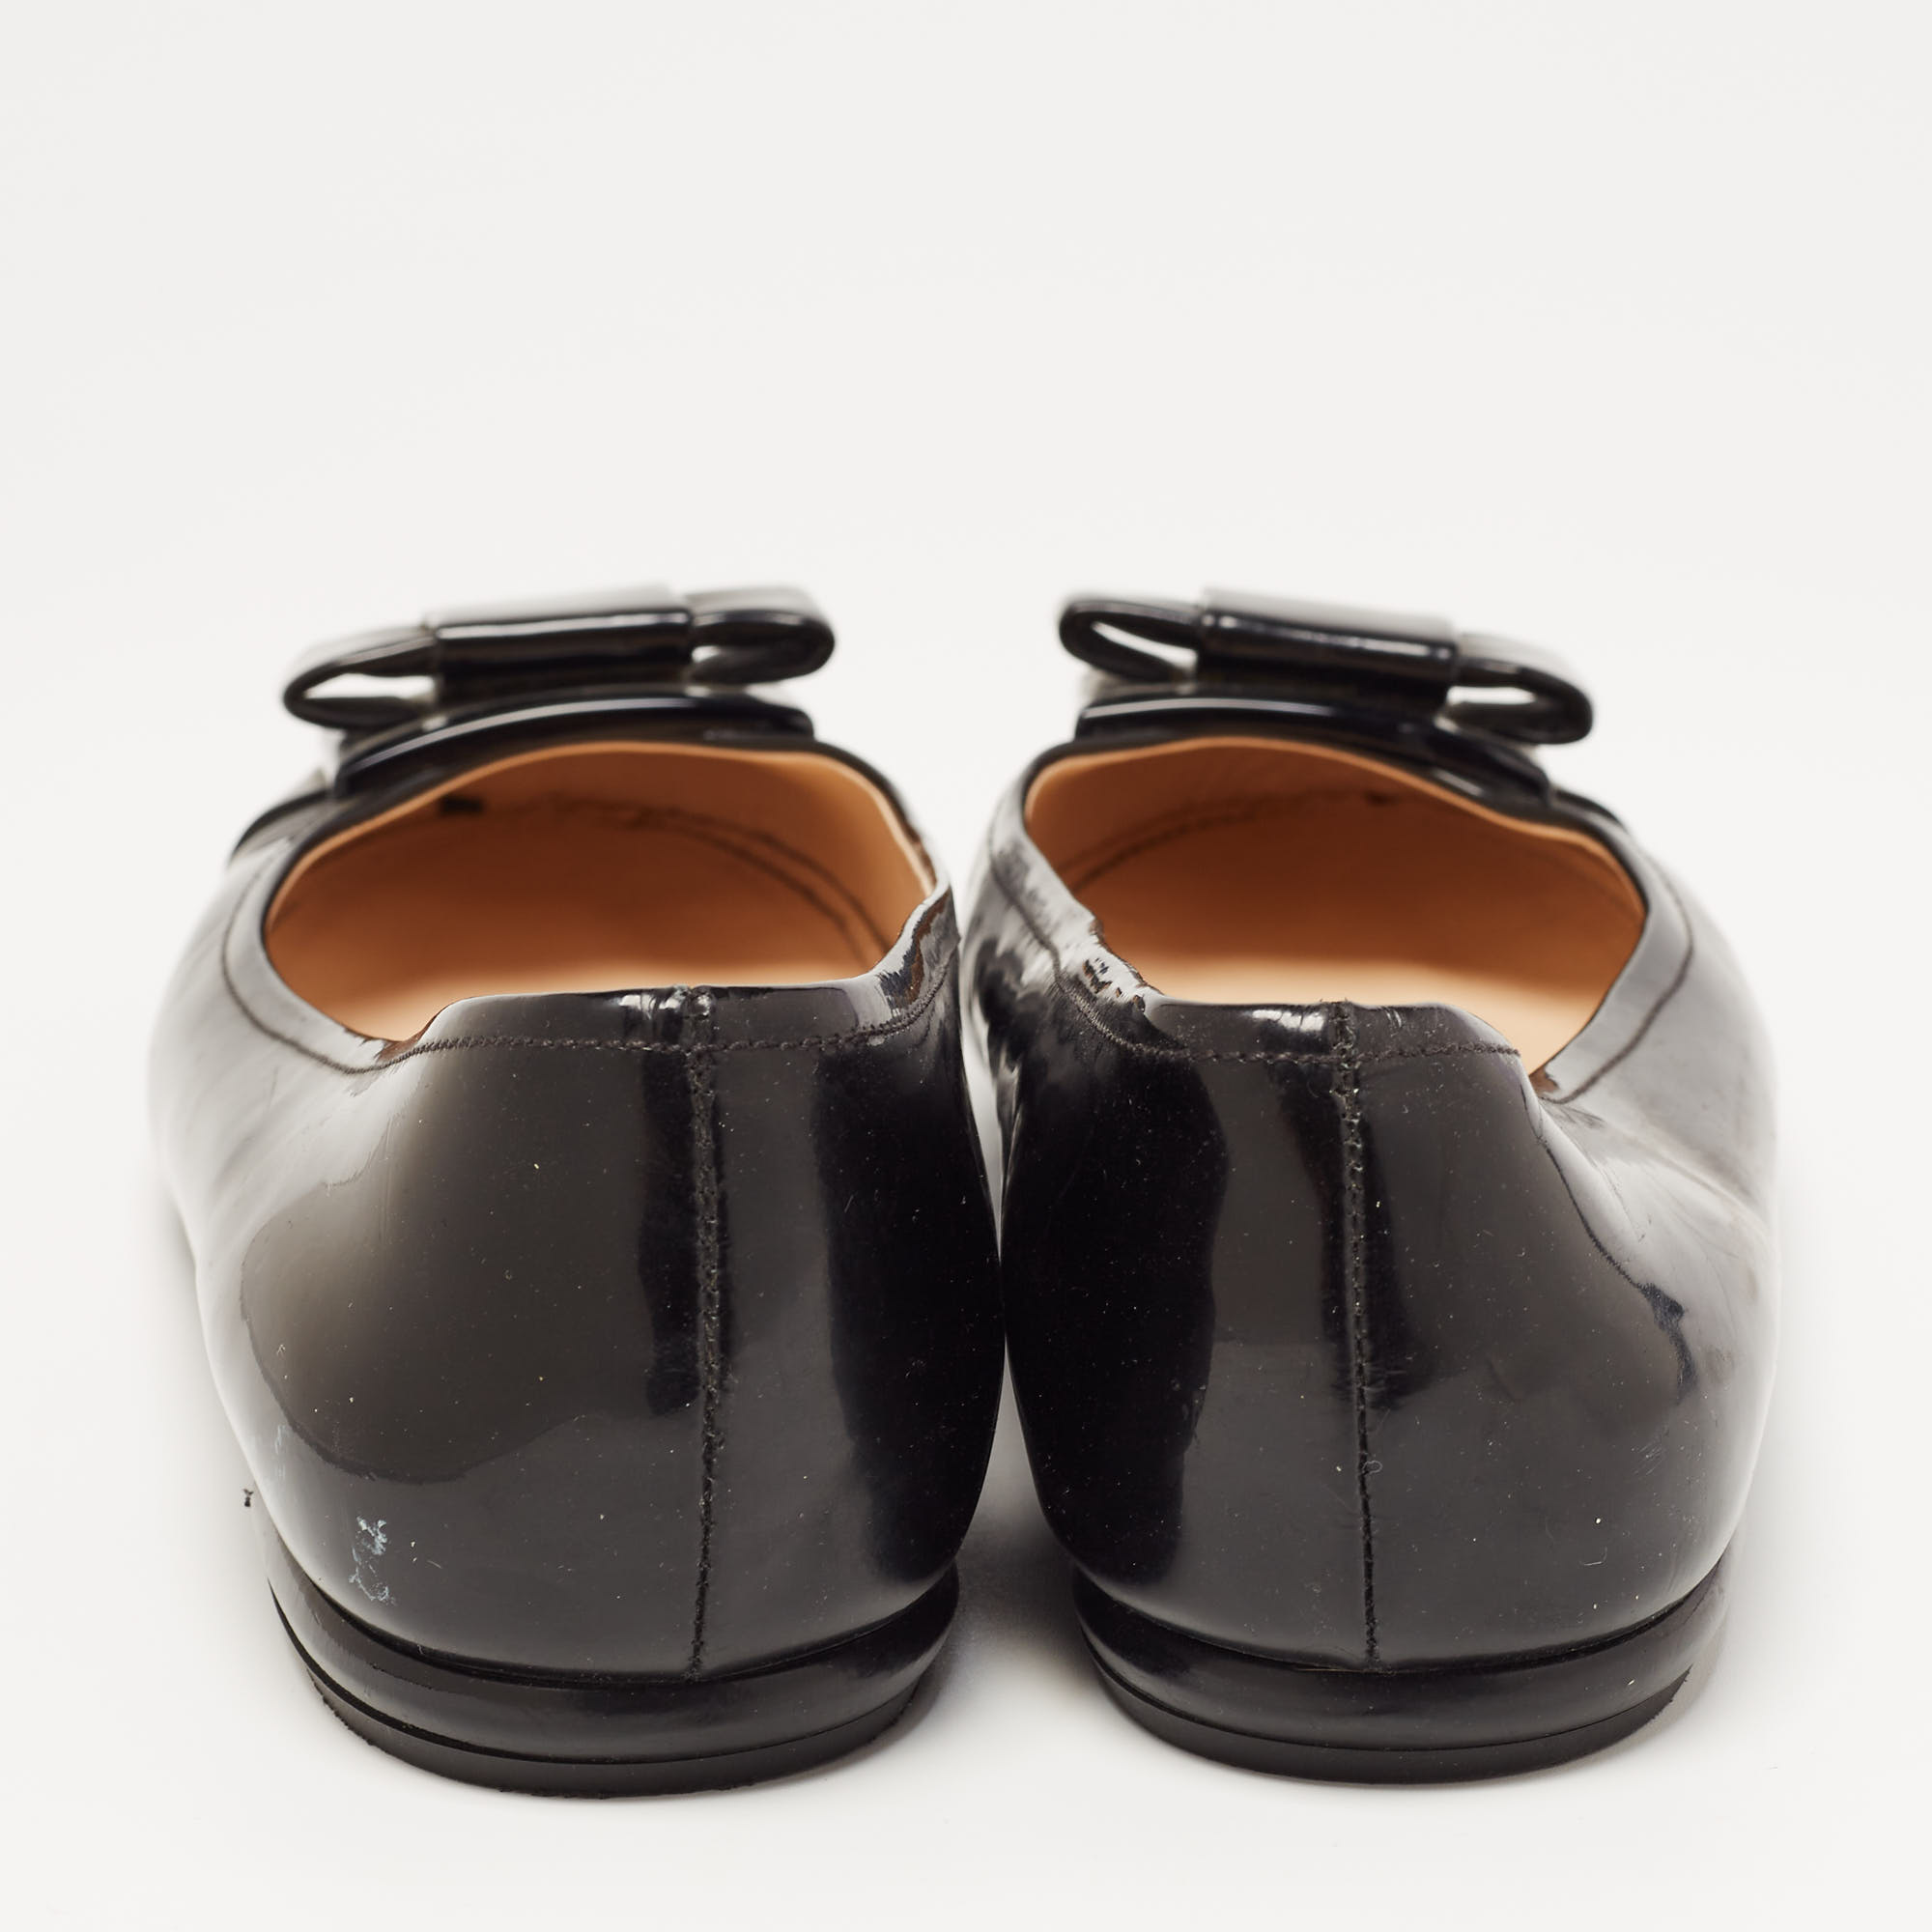 Prada Black Patent Leather Bow Ballet Flats Size 38